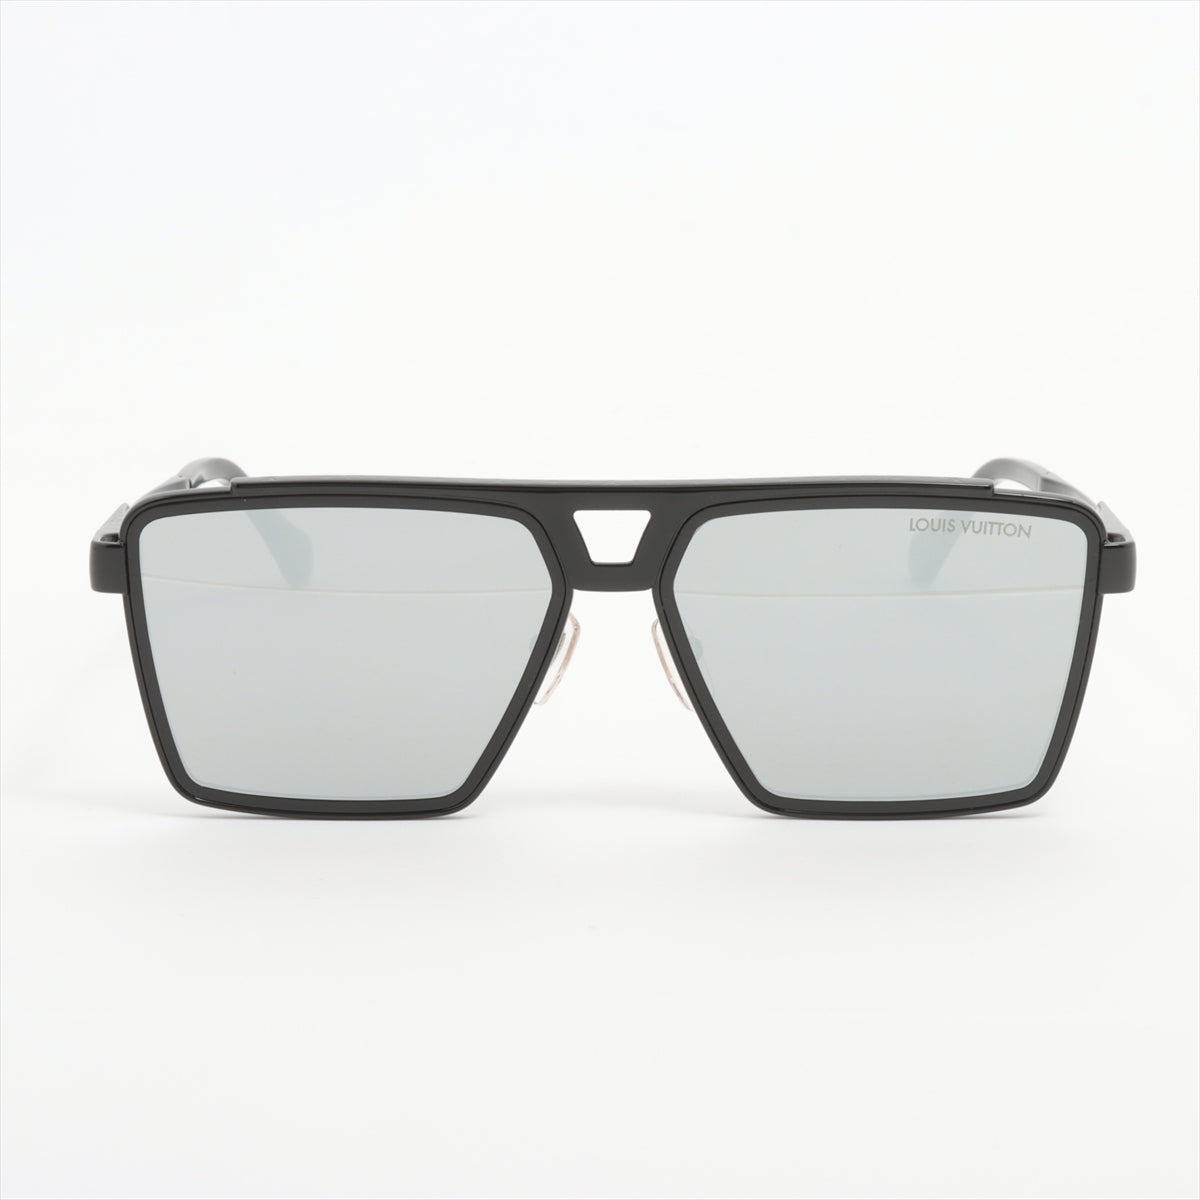 Louis Vuitton Sunglasses 1.1 evidences metal Square RG5202 Sunglasses GP x plastic Black Z1898U